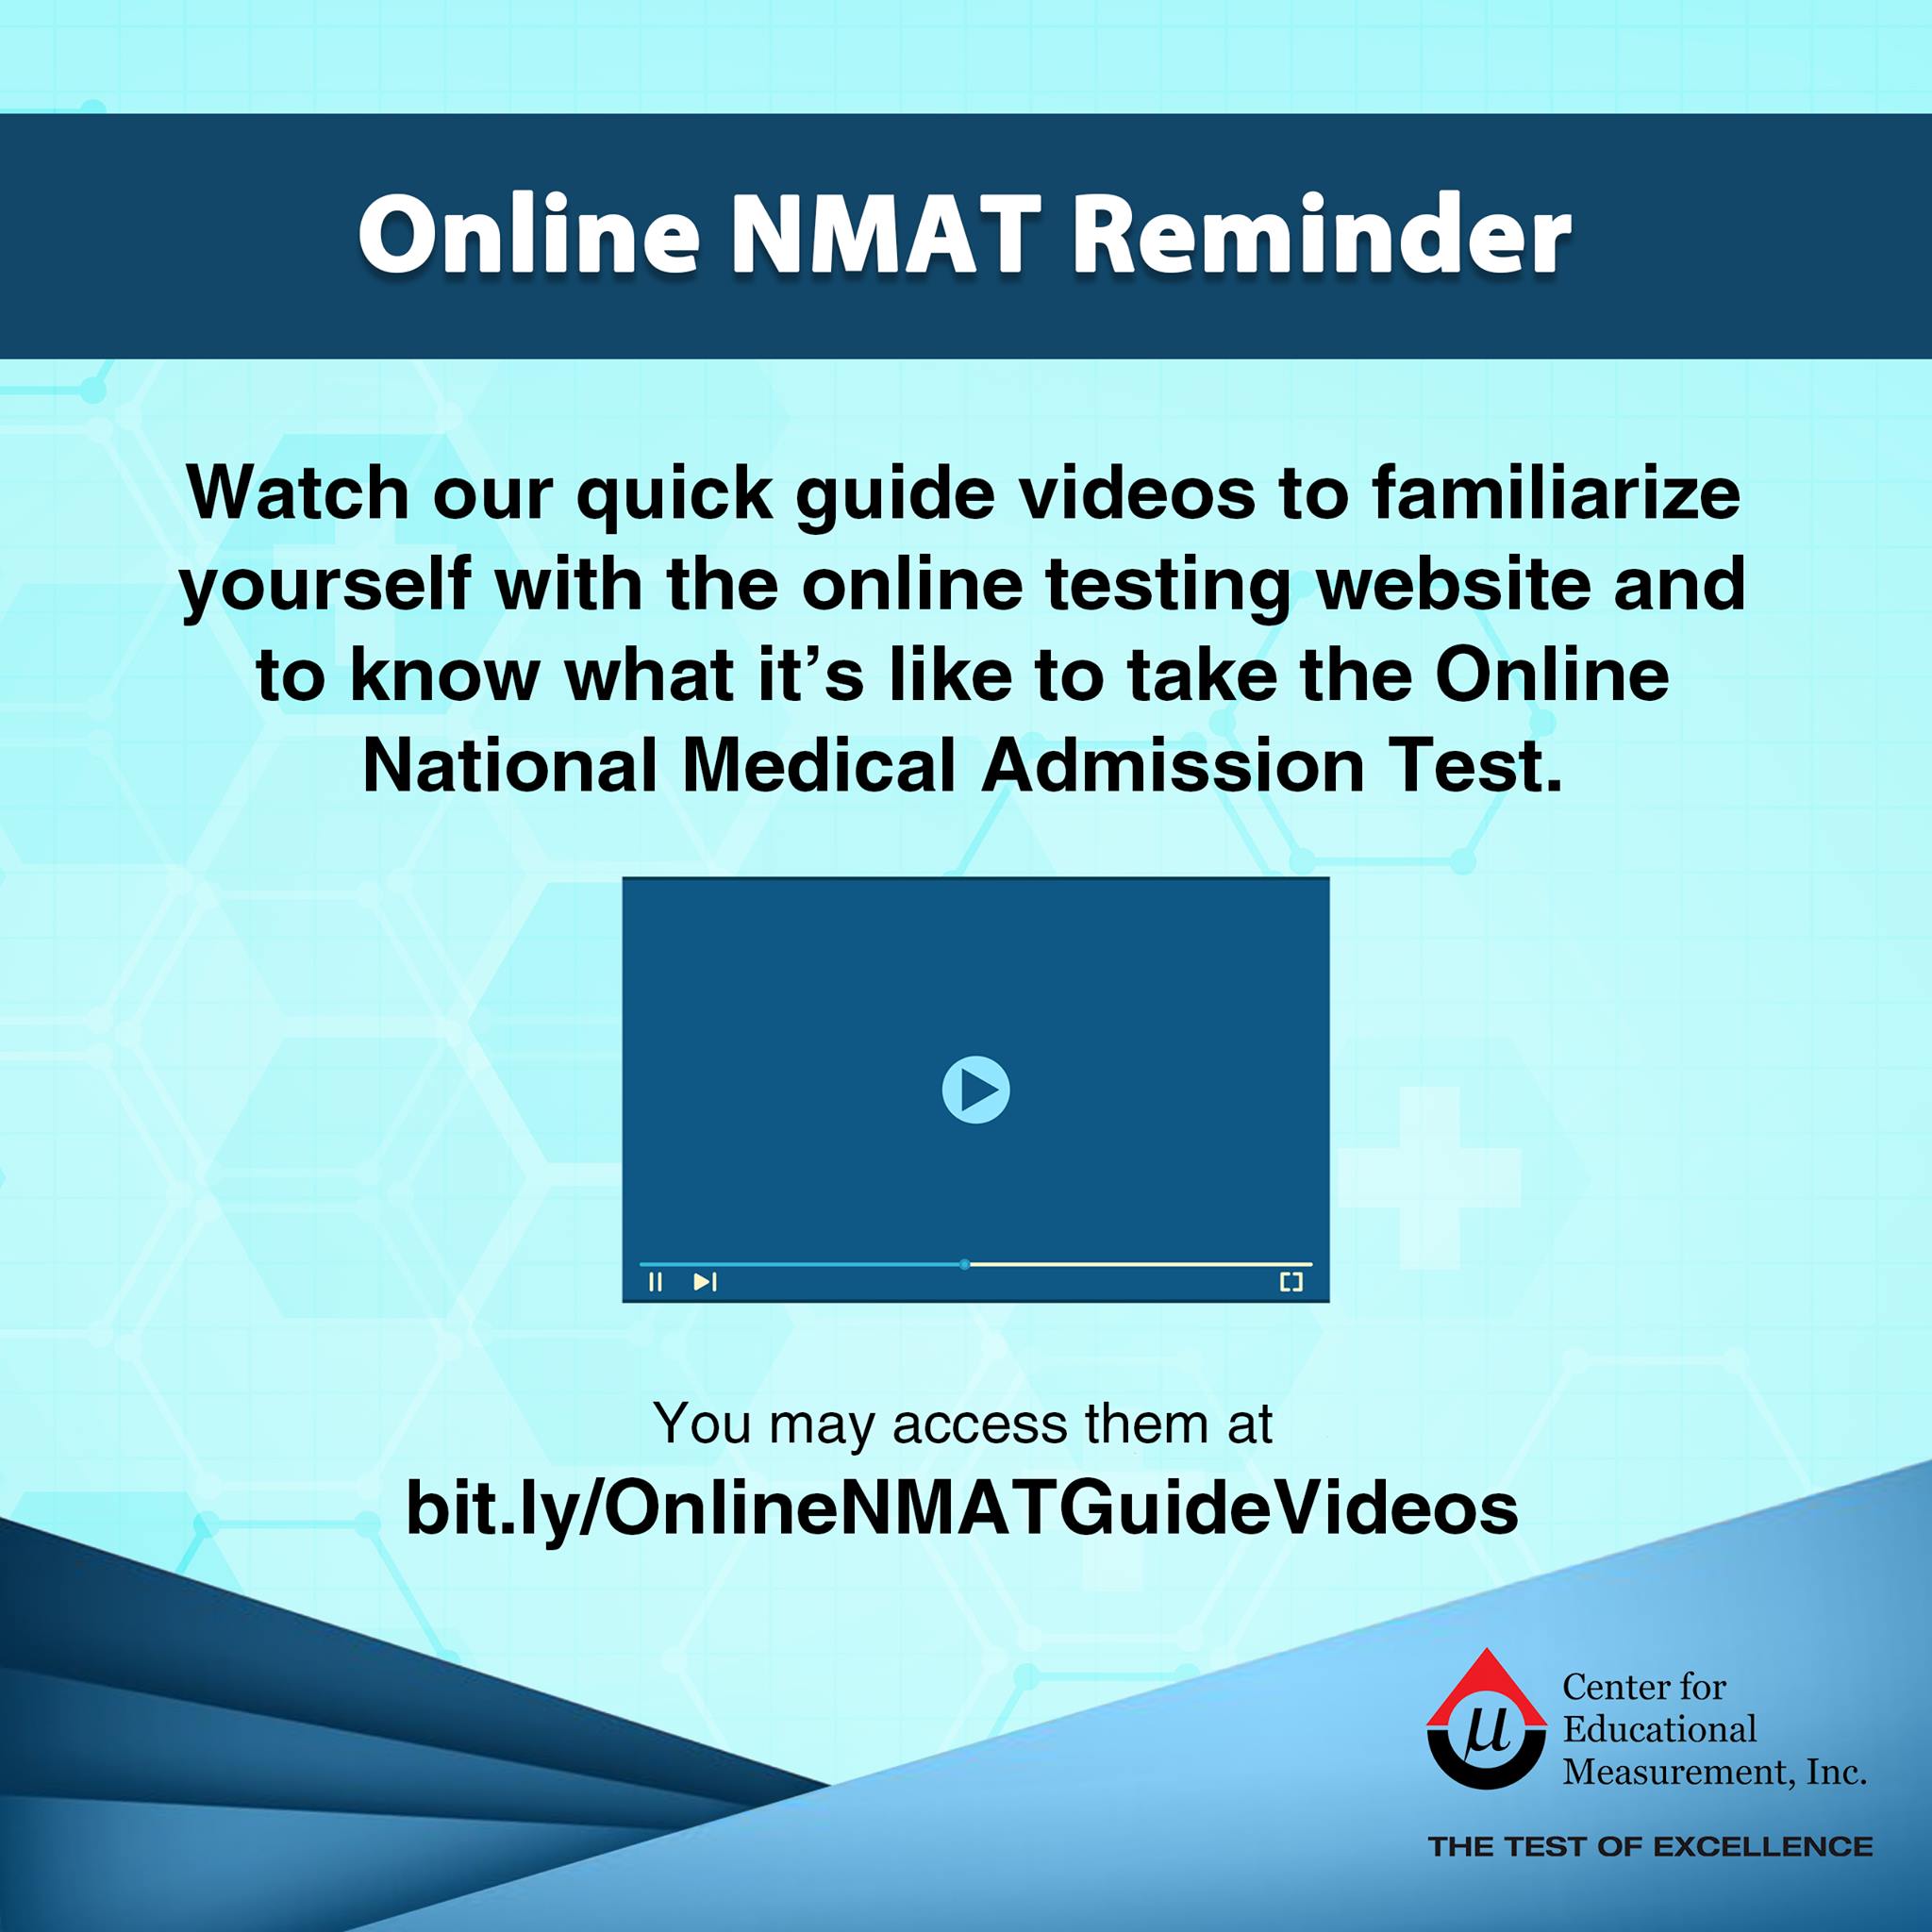 Online NMAT Guide Videos